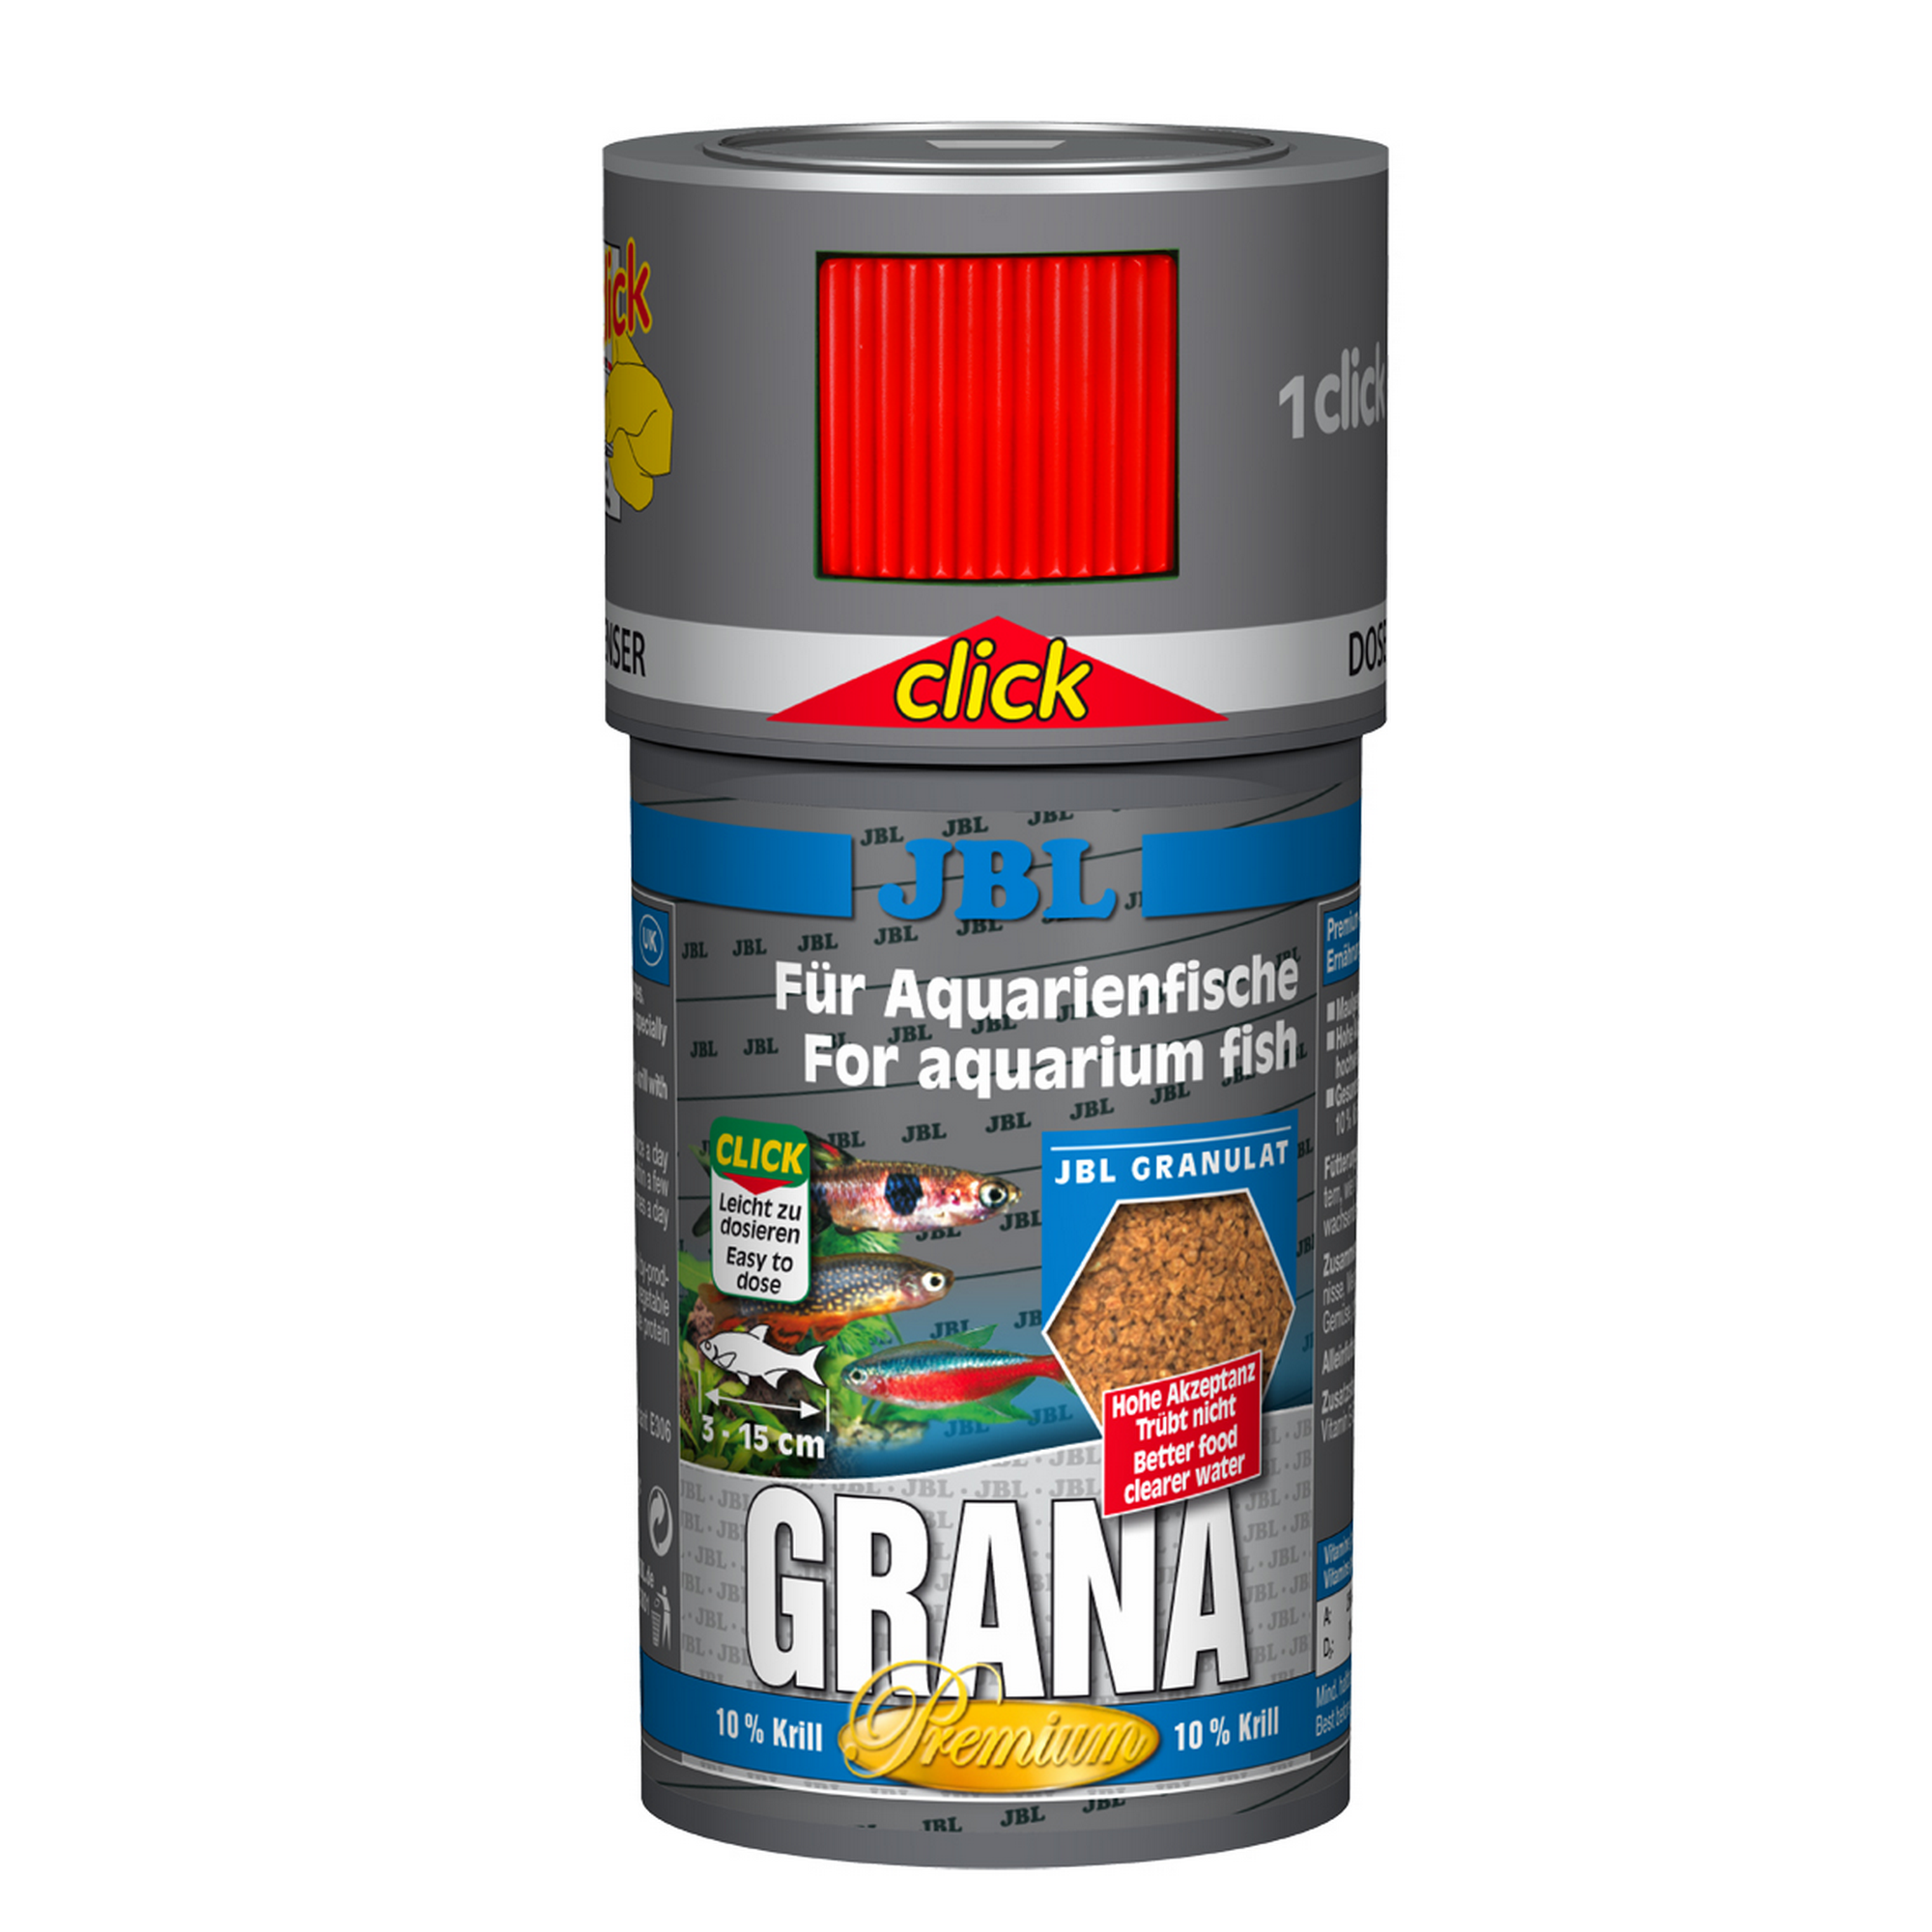 Grana Premium Für Aquarienfische 100 ml + product picture